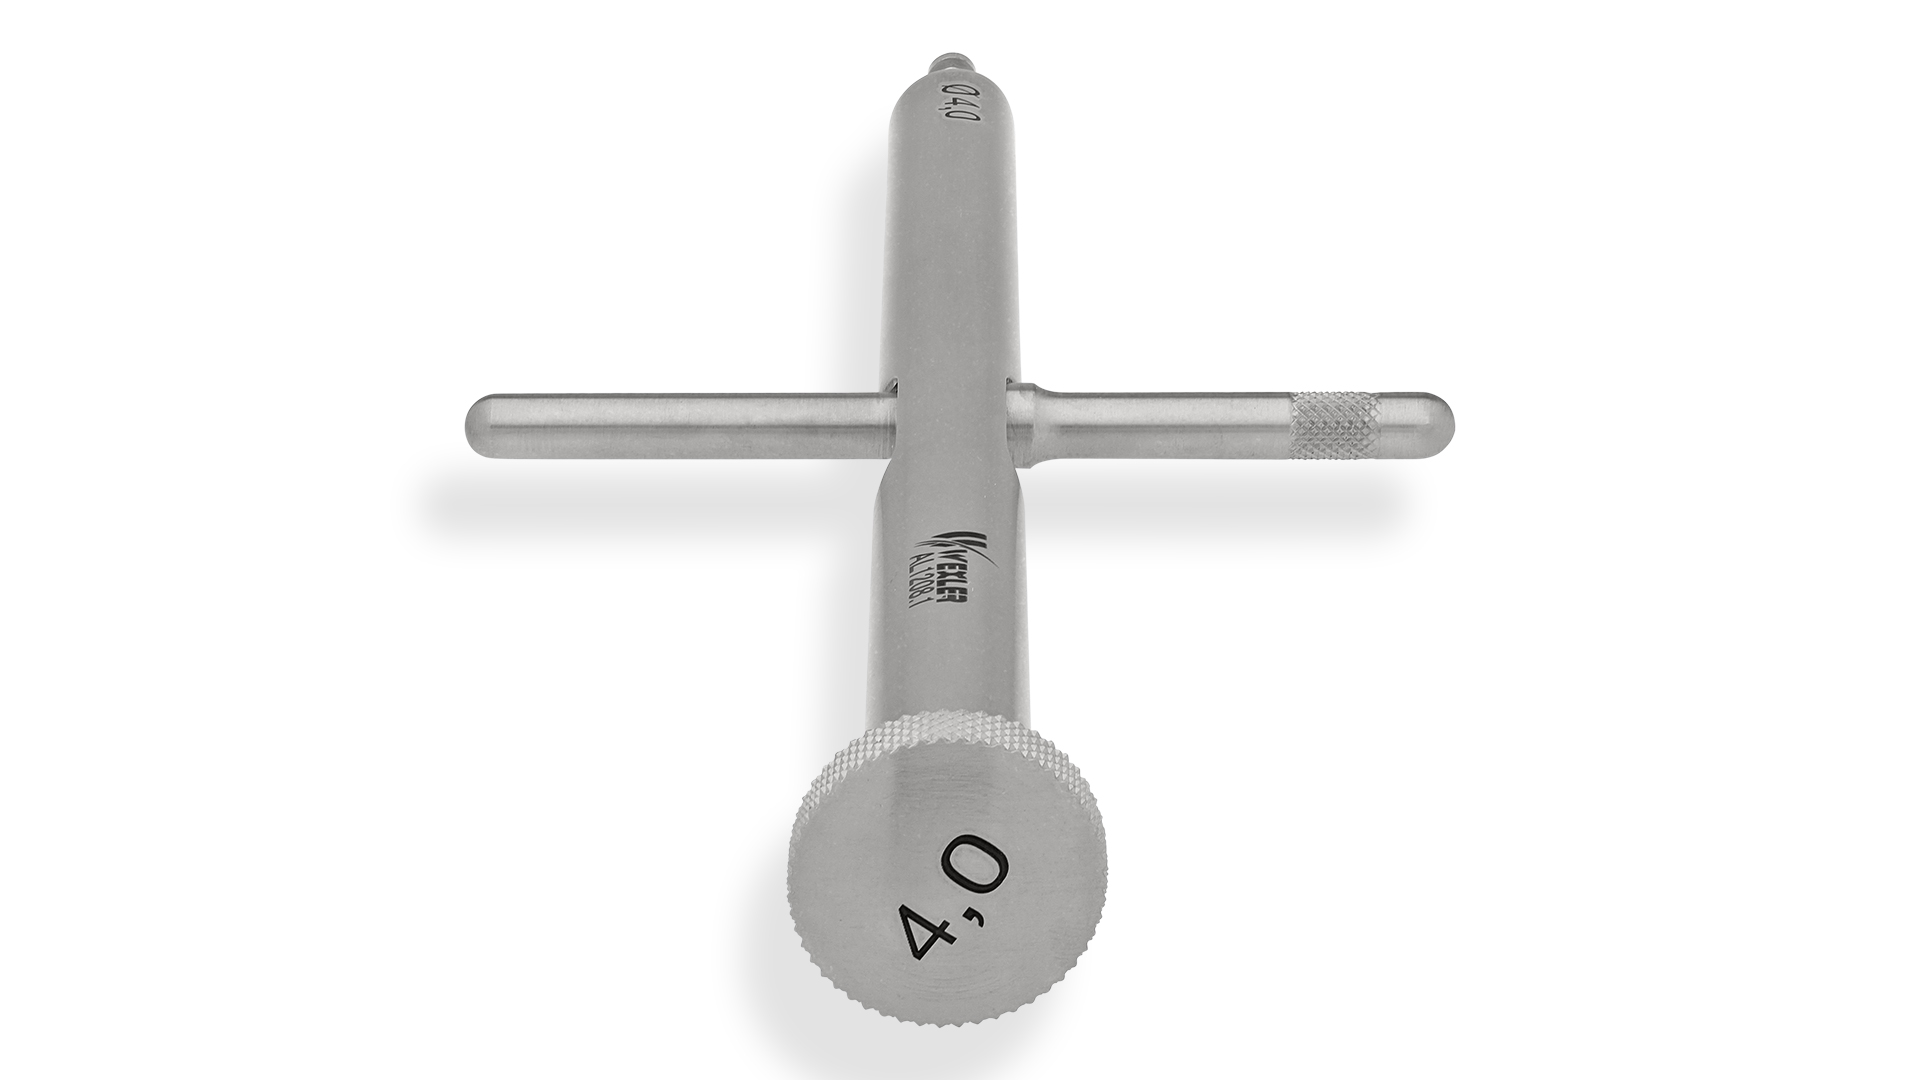 Aorta/Vein Punch - 4.0mm tip